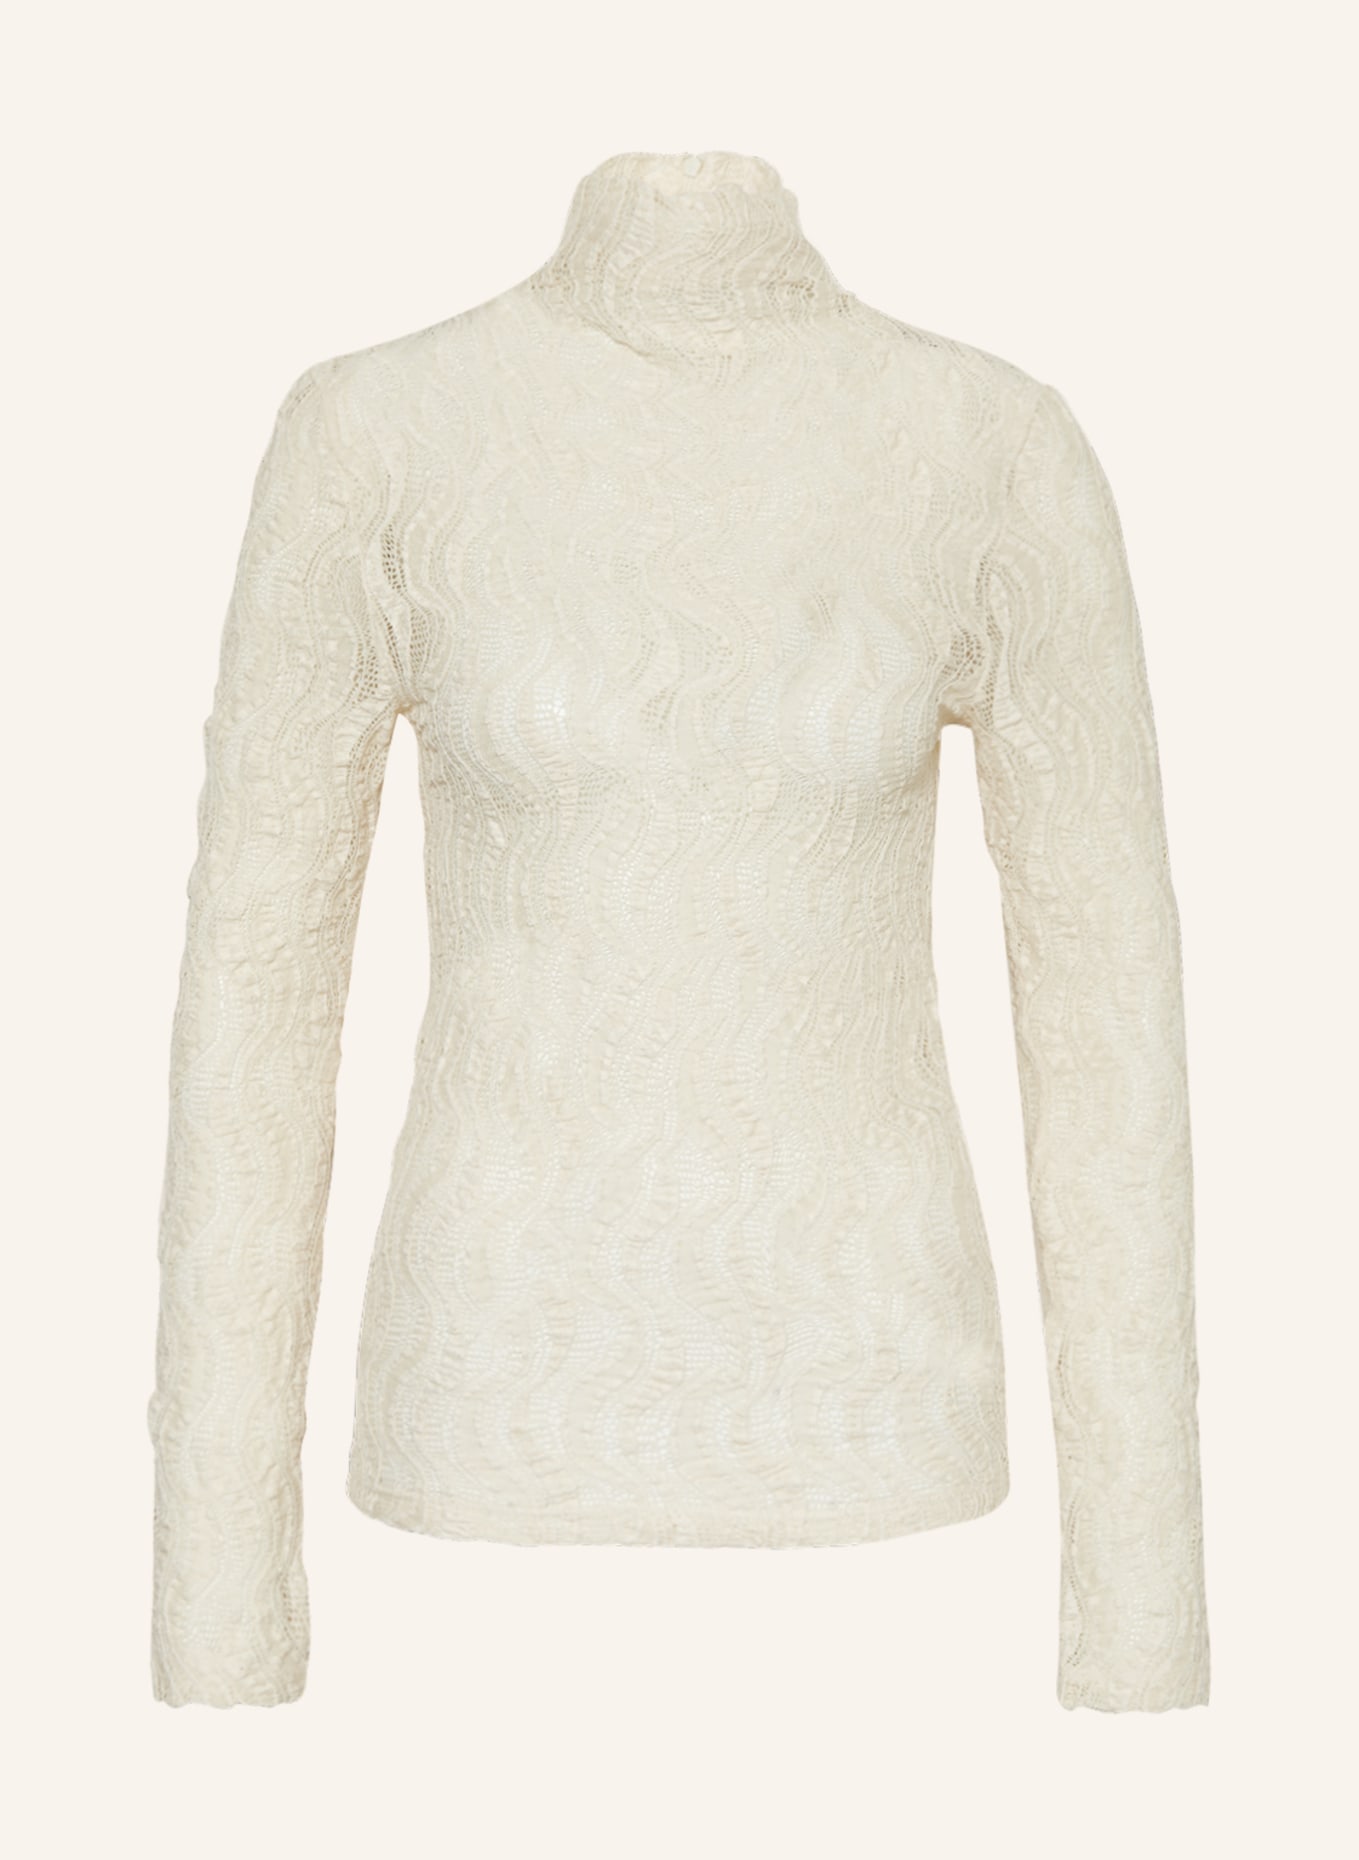 RÓHE Long sleeve shirt made of lace, Color: ECRU (Image 1)